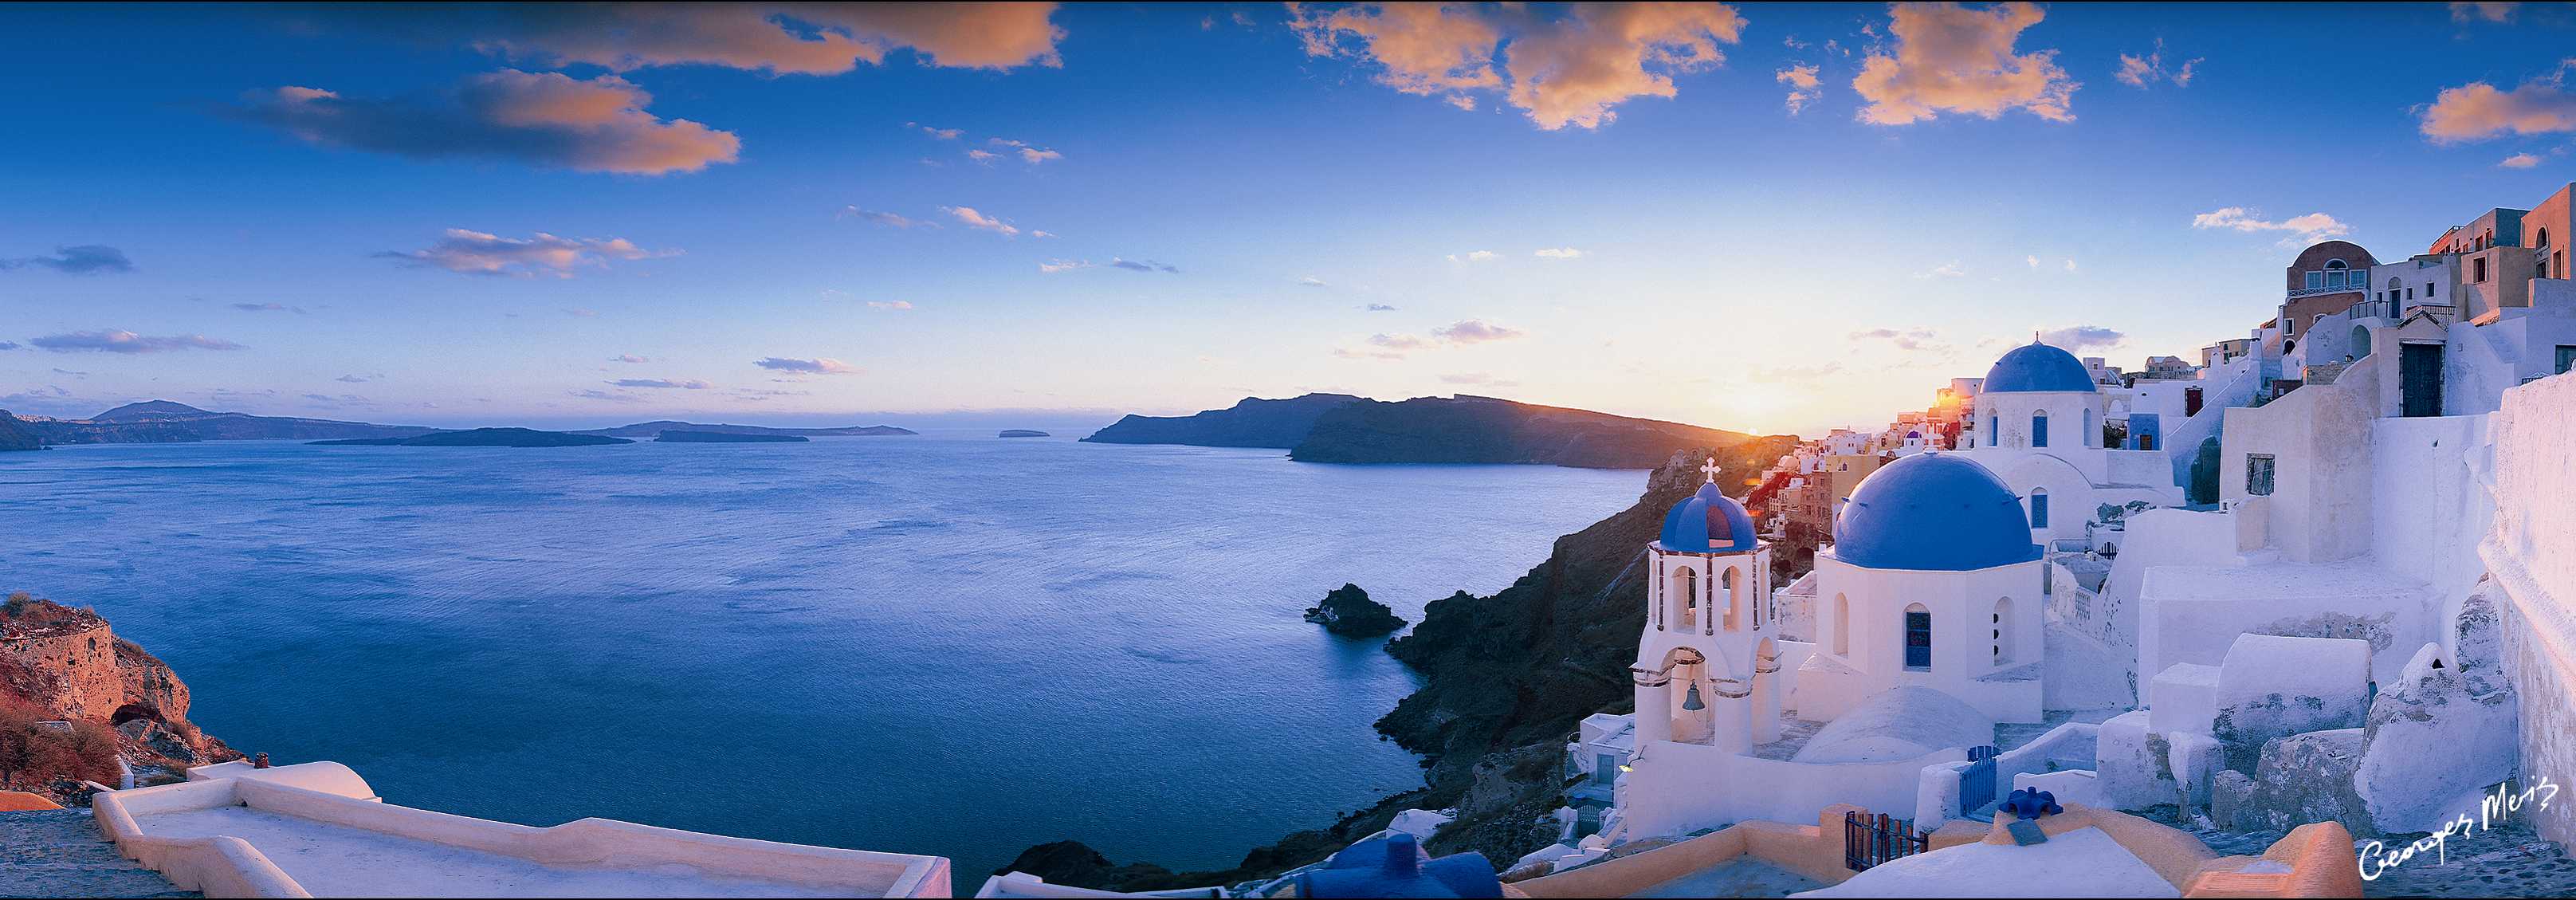 Santorini Image HD & Islands Wallpaper